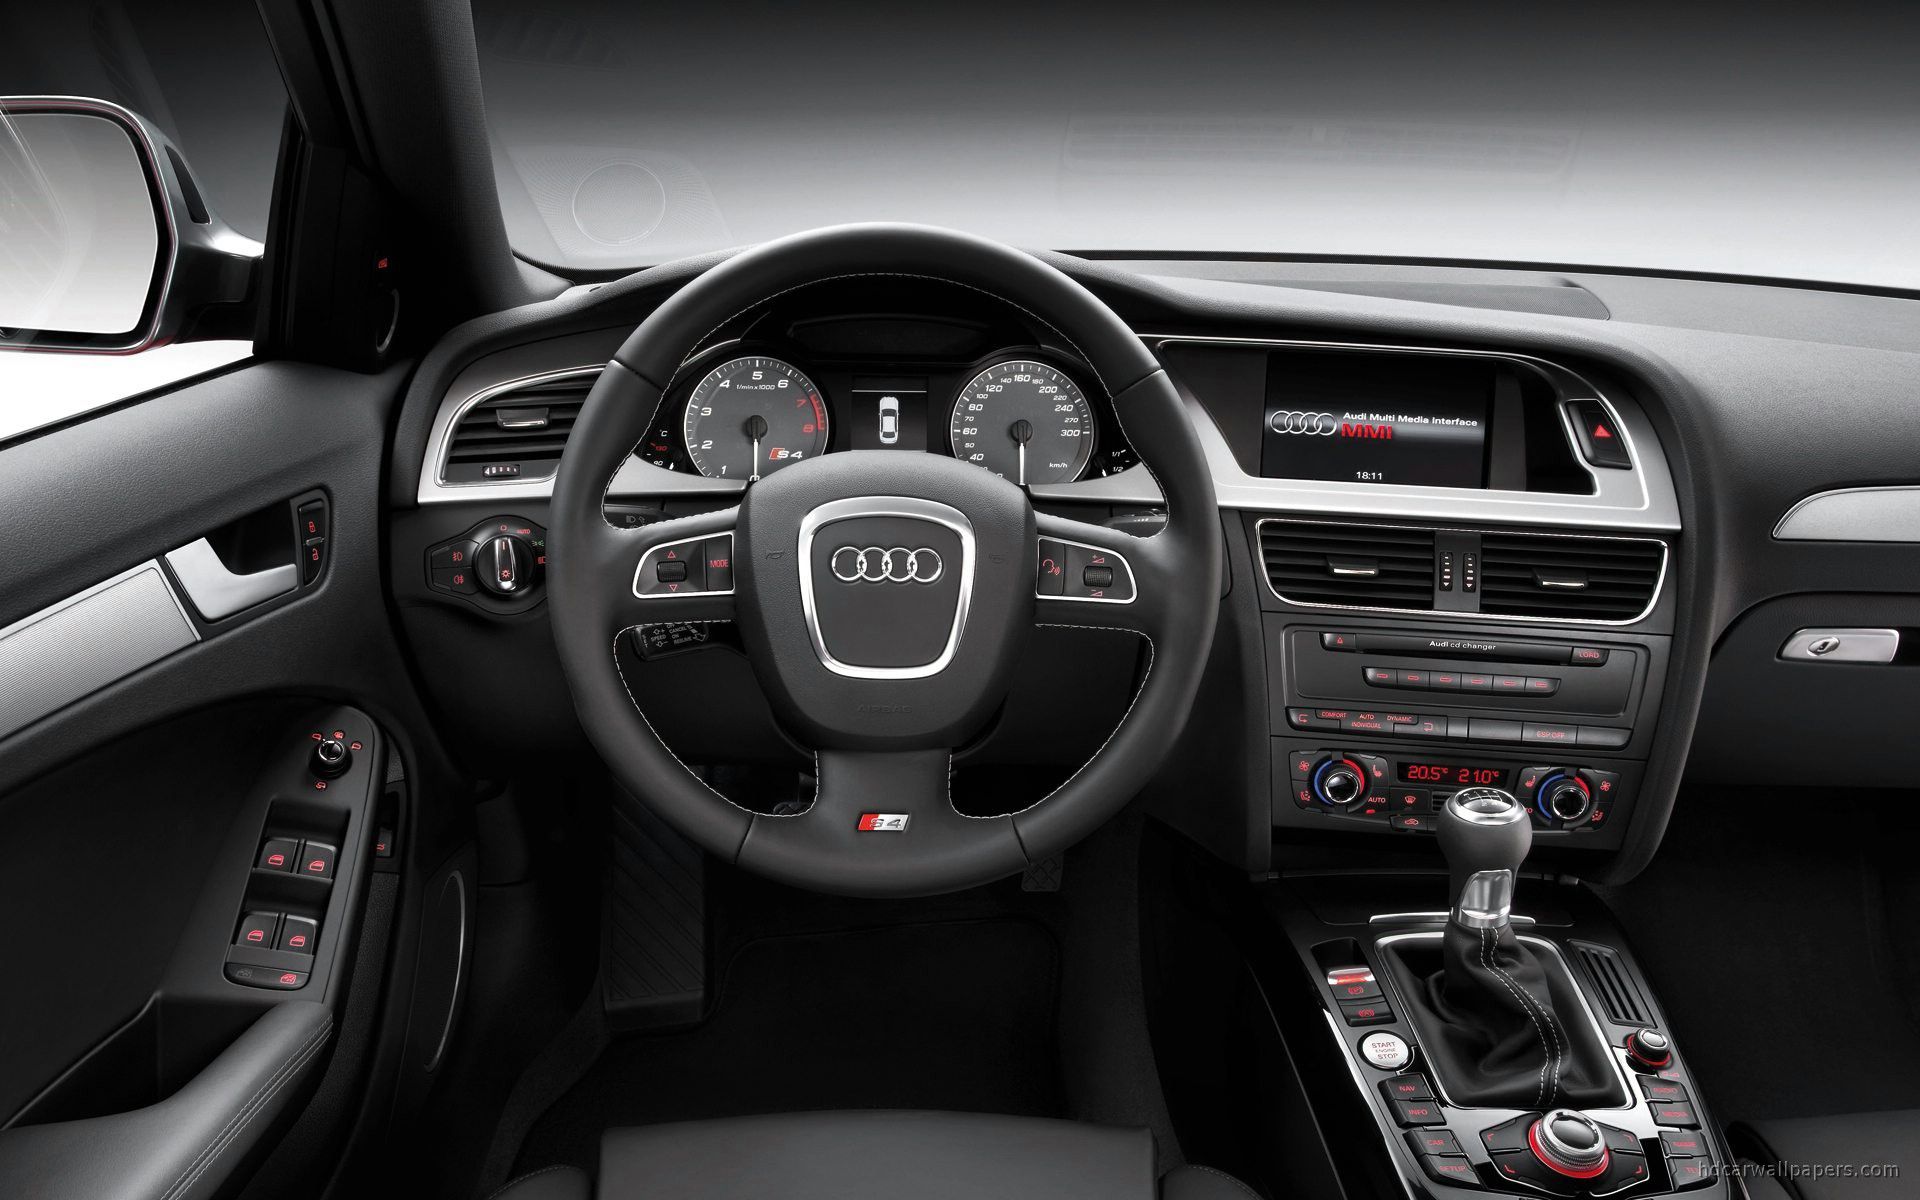 2009 Audi S4 Interior Wallpaper | HD Car Wallpapers